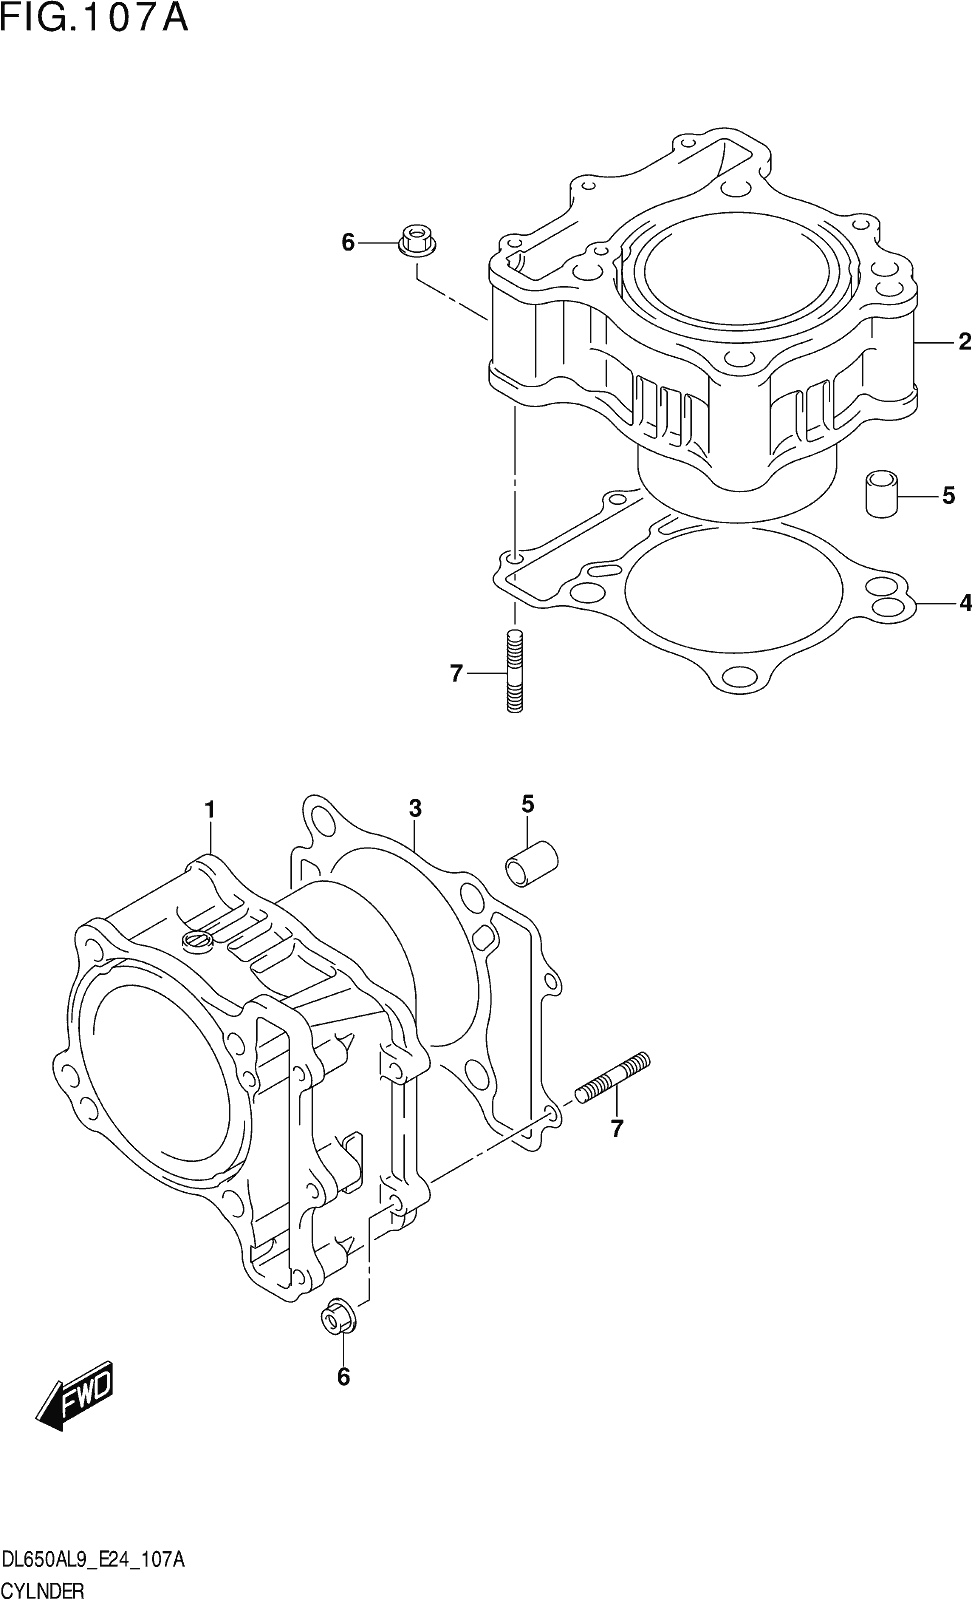 Fig.107a Cylinder